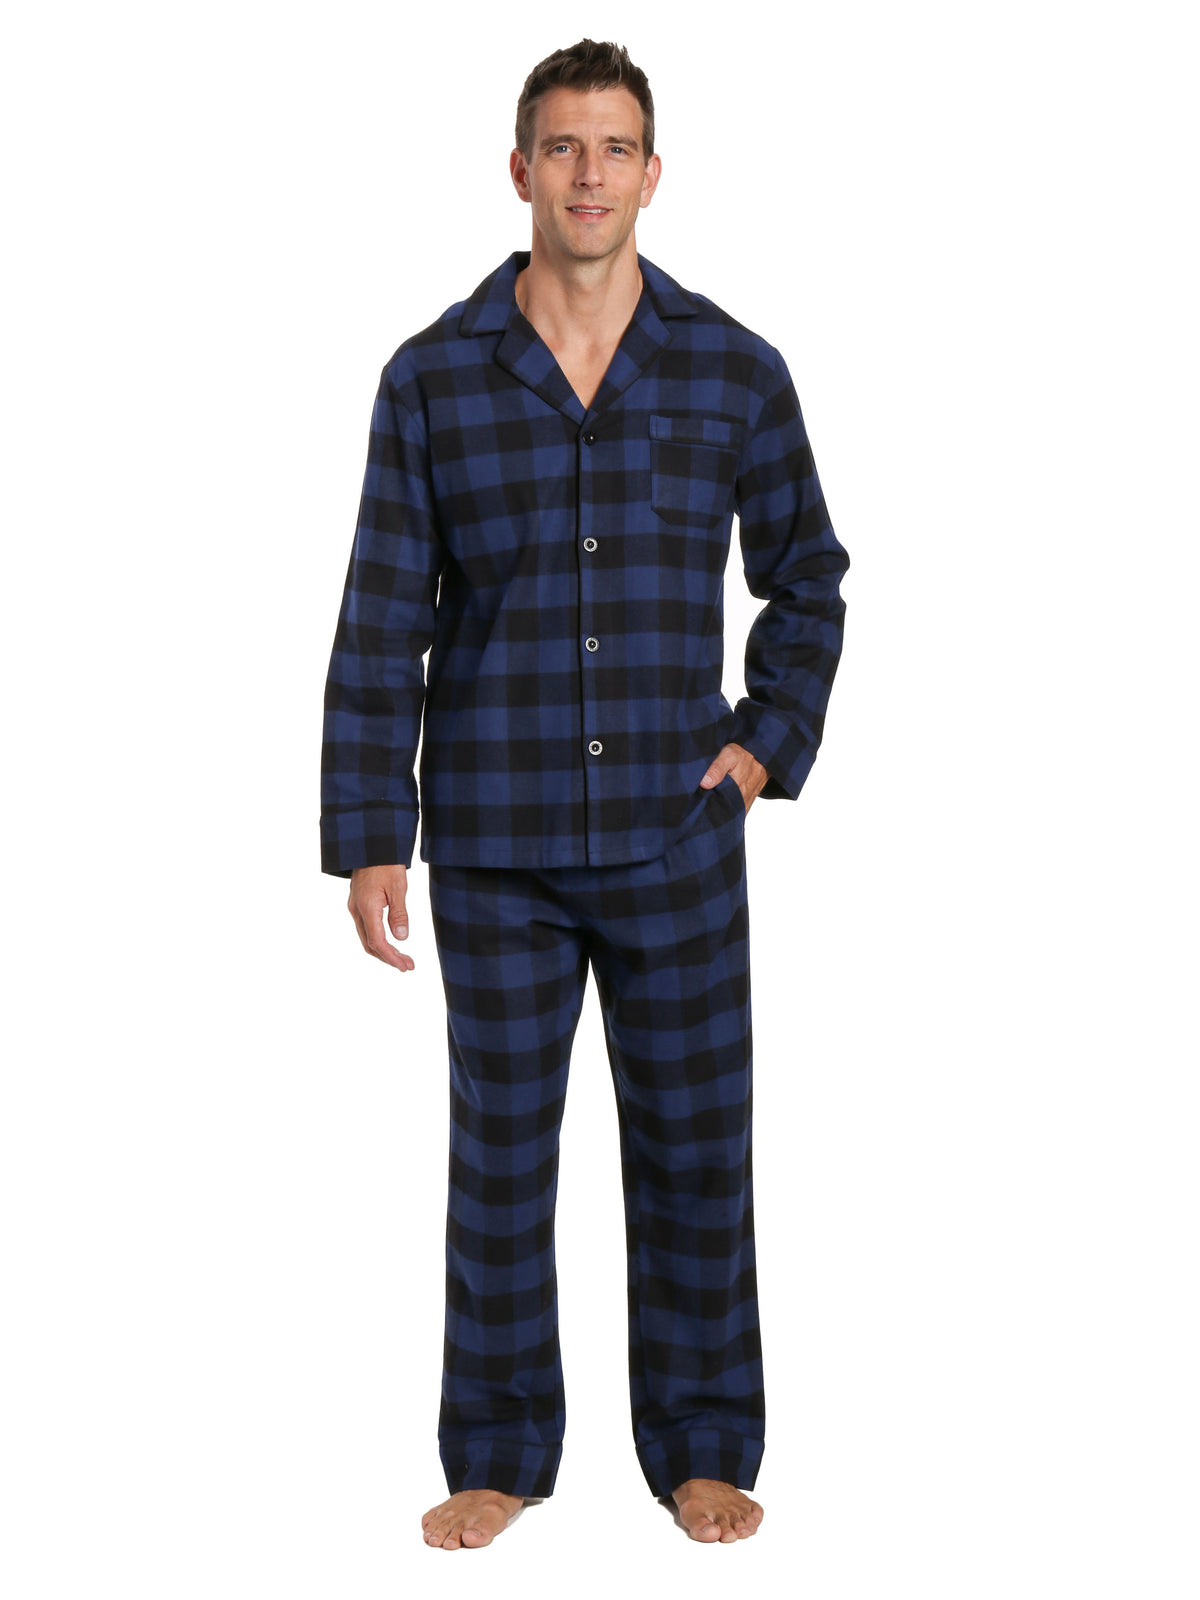 Mens 100% Cotton Flannel Pajama Set - Gingham Checks - Black-Blue